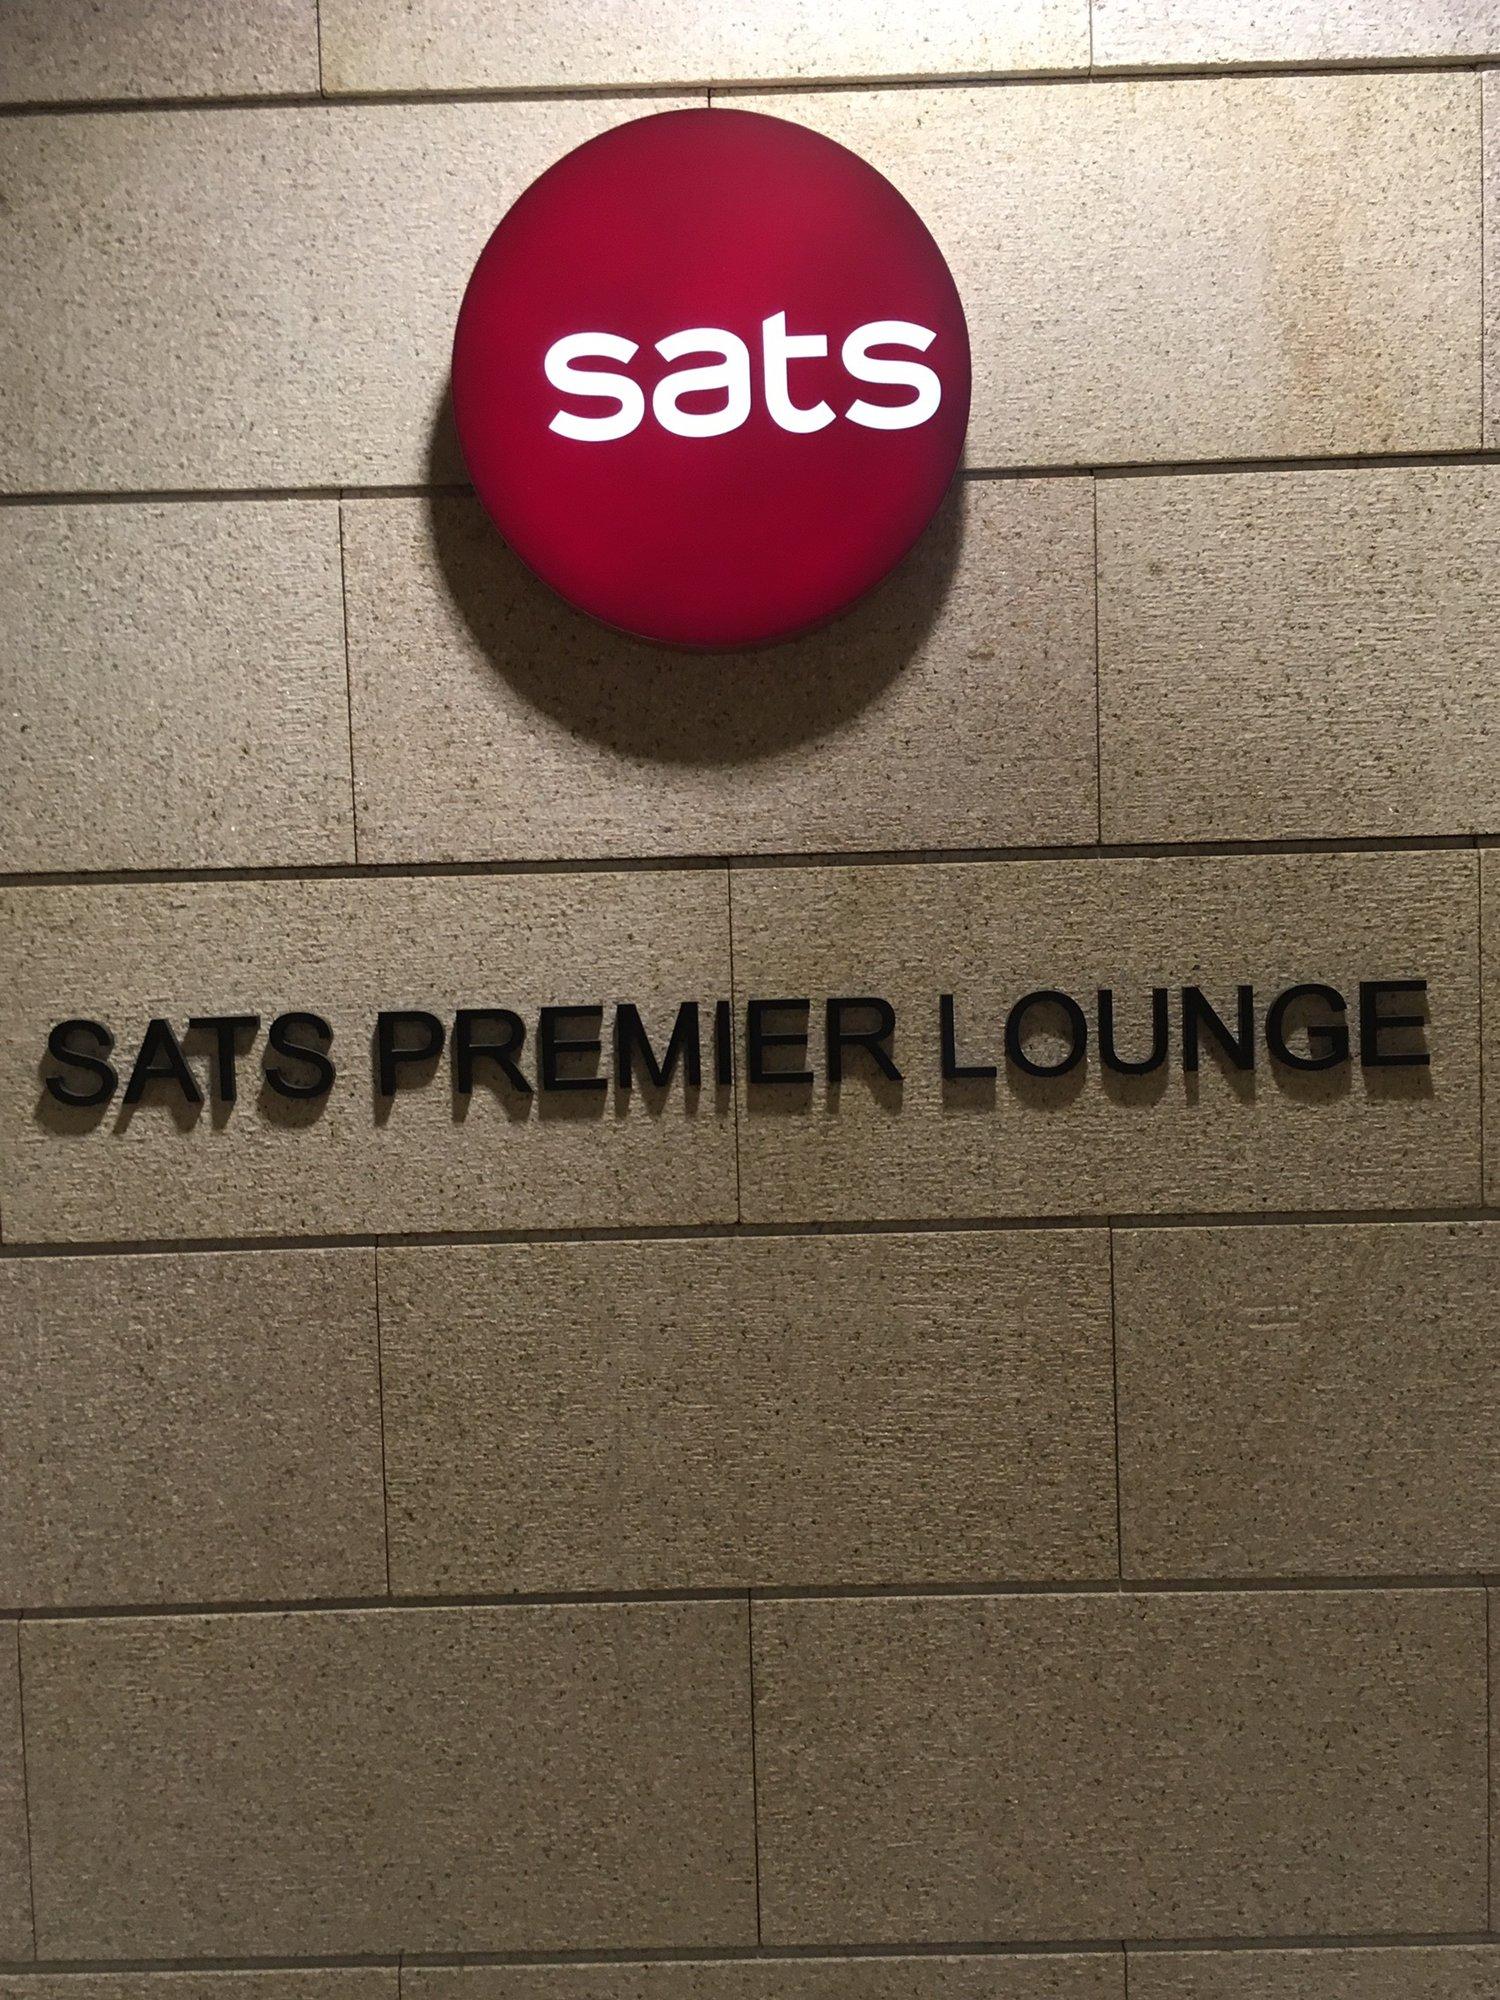 SATS Premier Lounge image 21 of 46